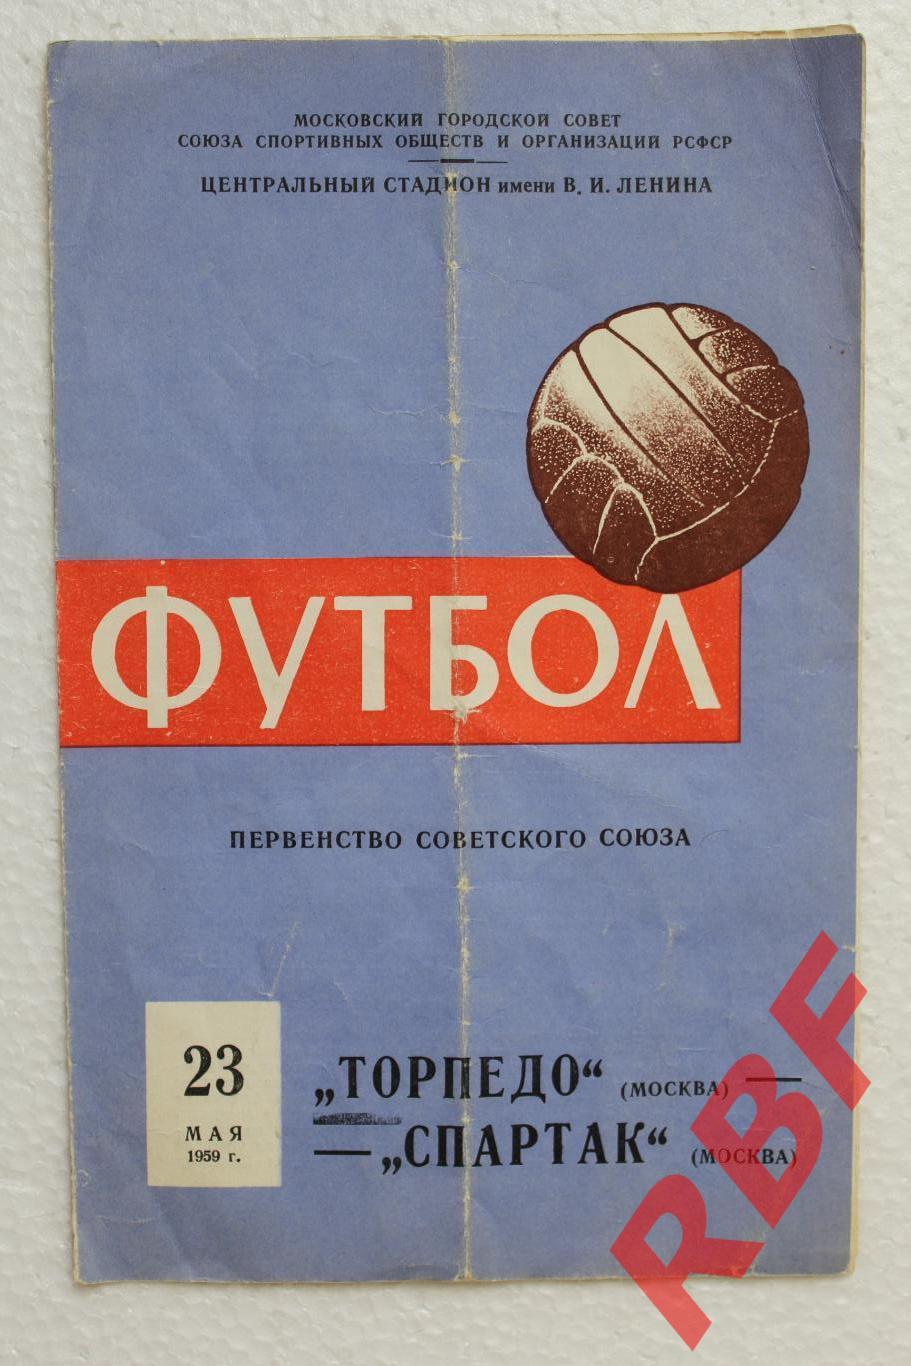 Спартак Москва - Торпедо Москва,23 мая 1959